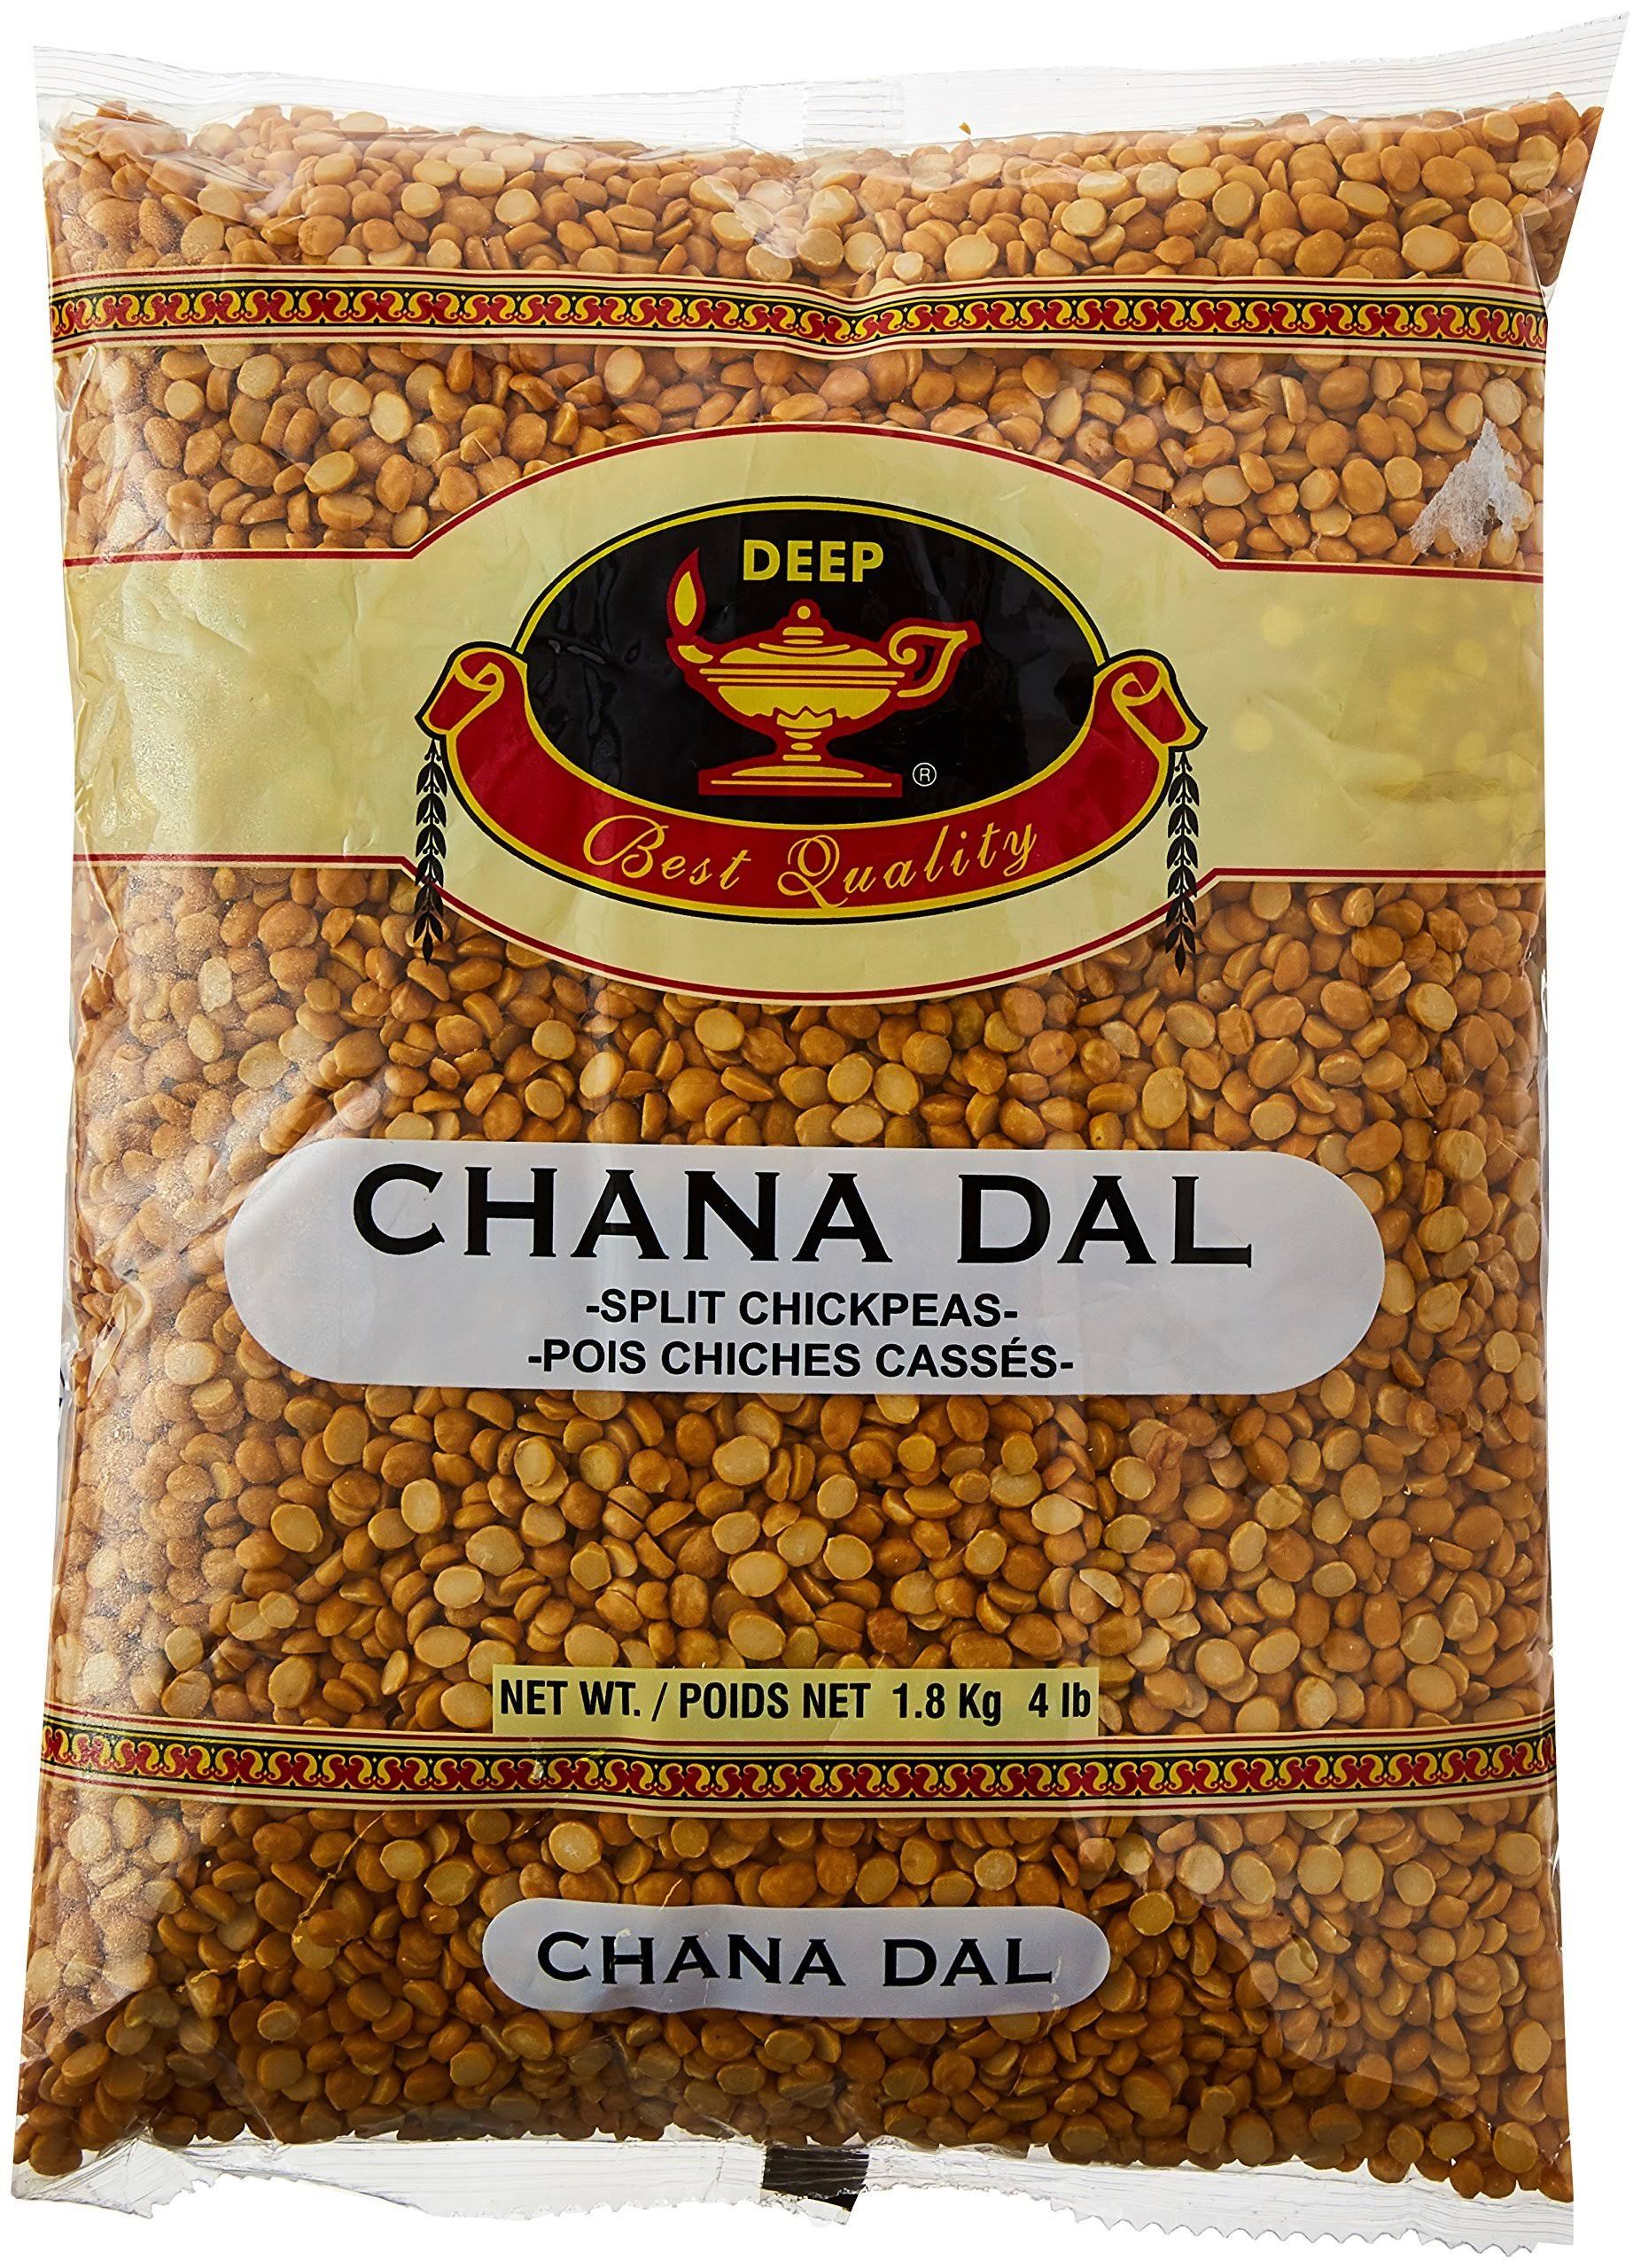 Deep Chana Dal Split Chick Peas - 4 lb